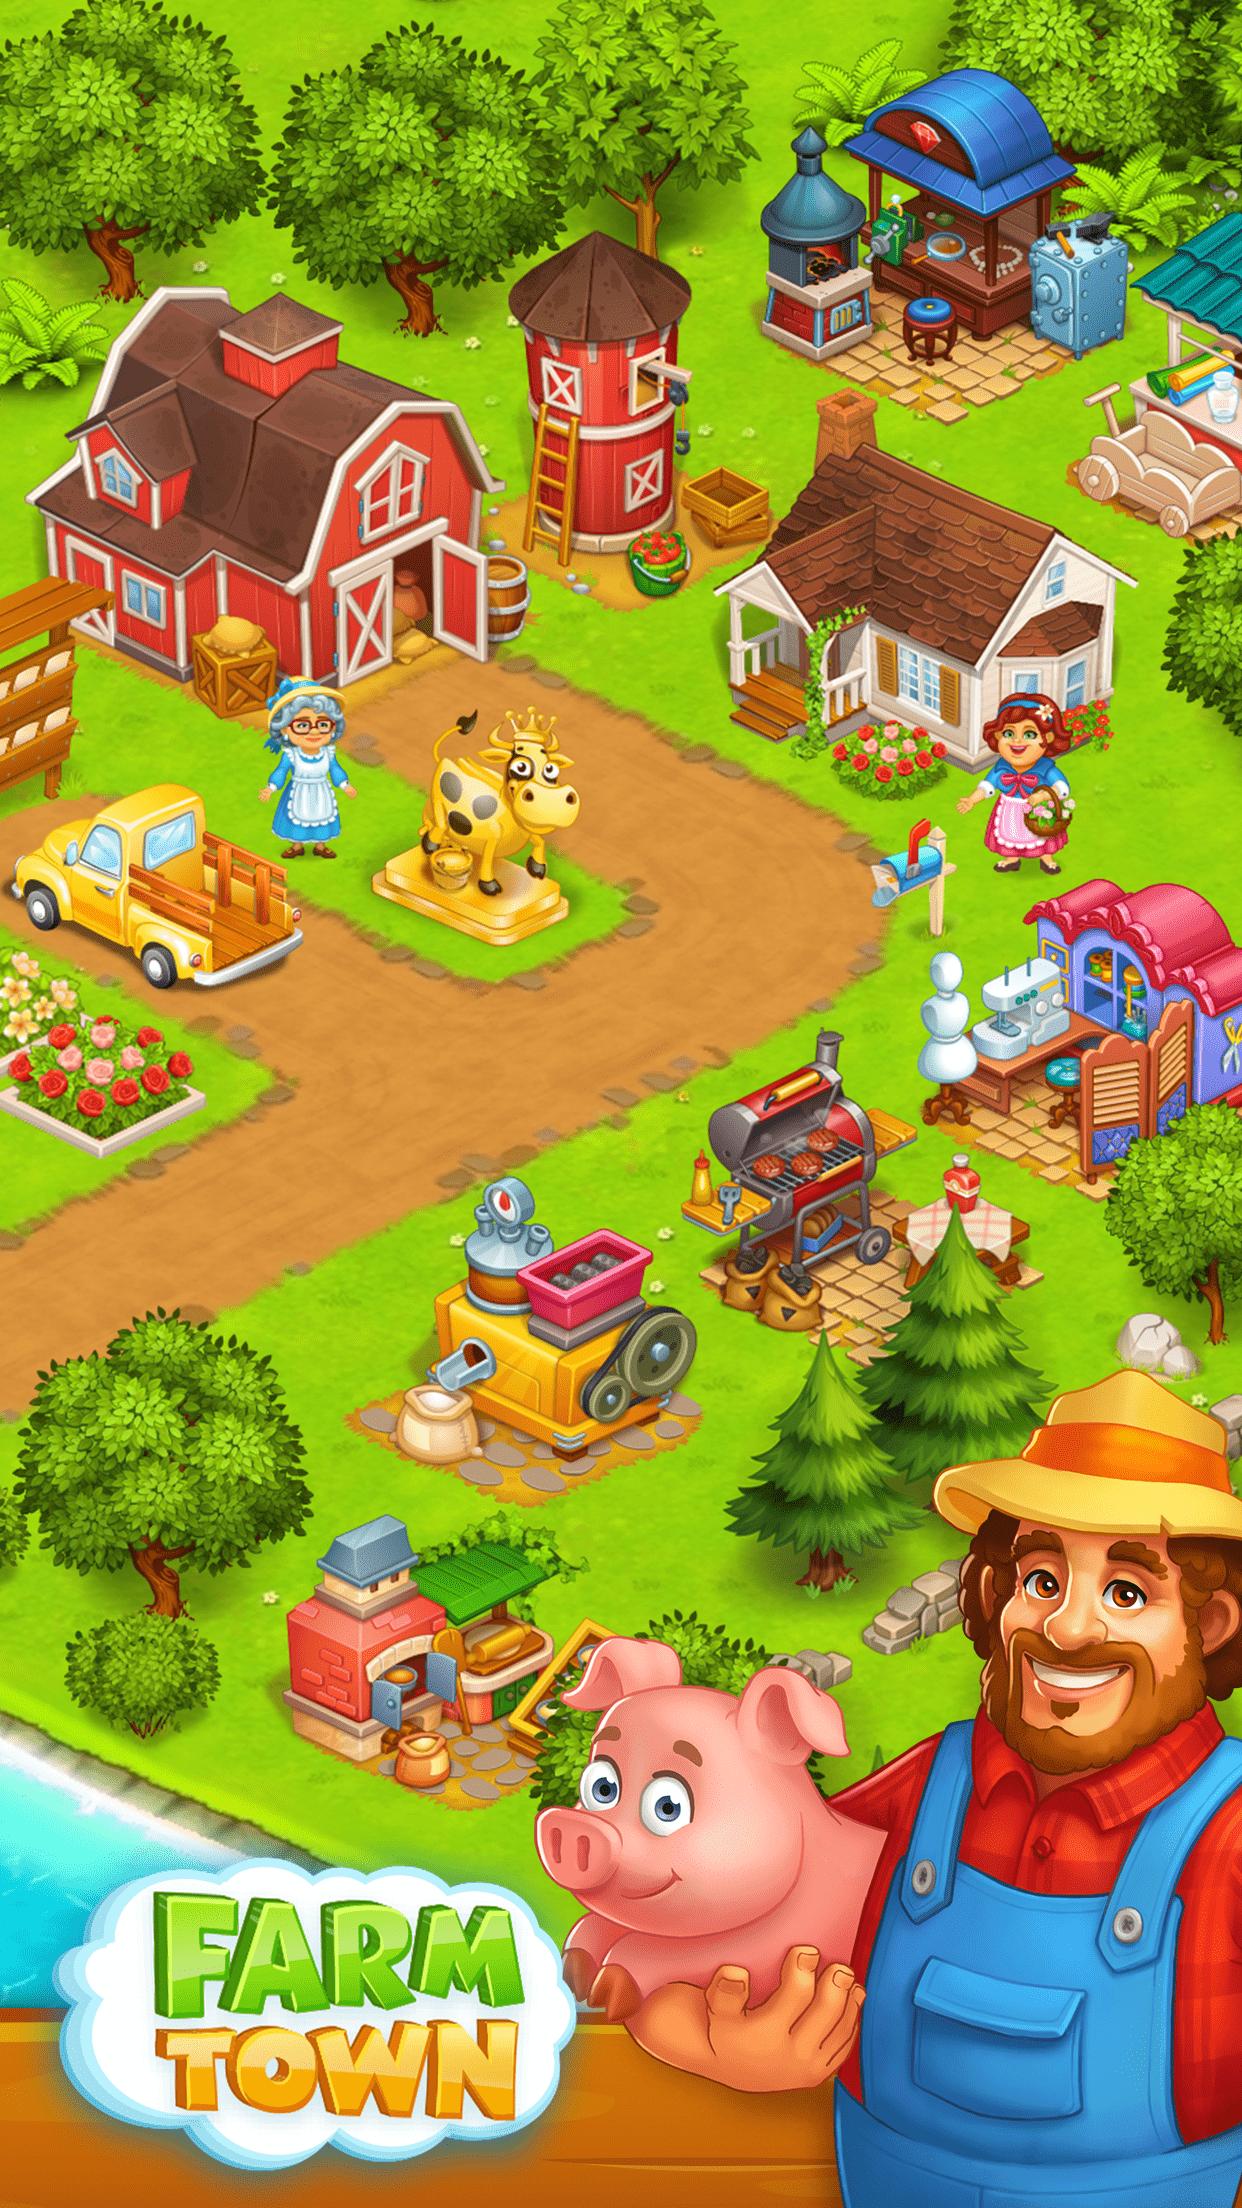 Farm Town: Happy village near small city and town 3.41 Screenshot 7